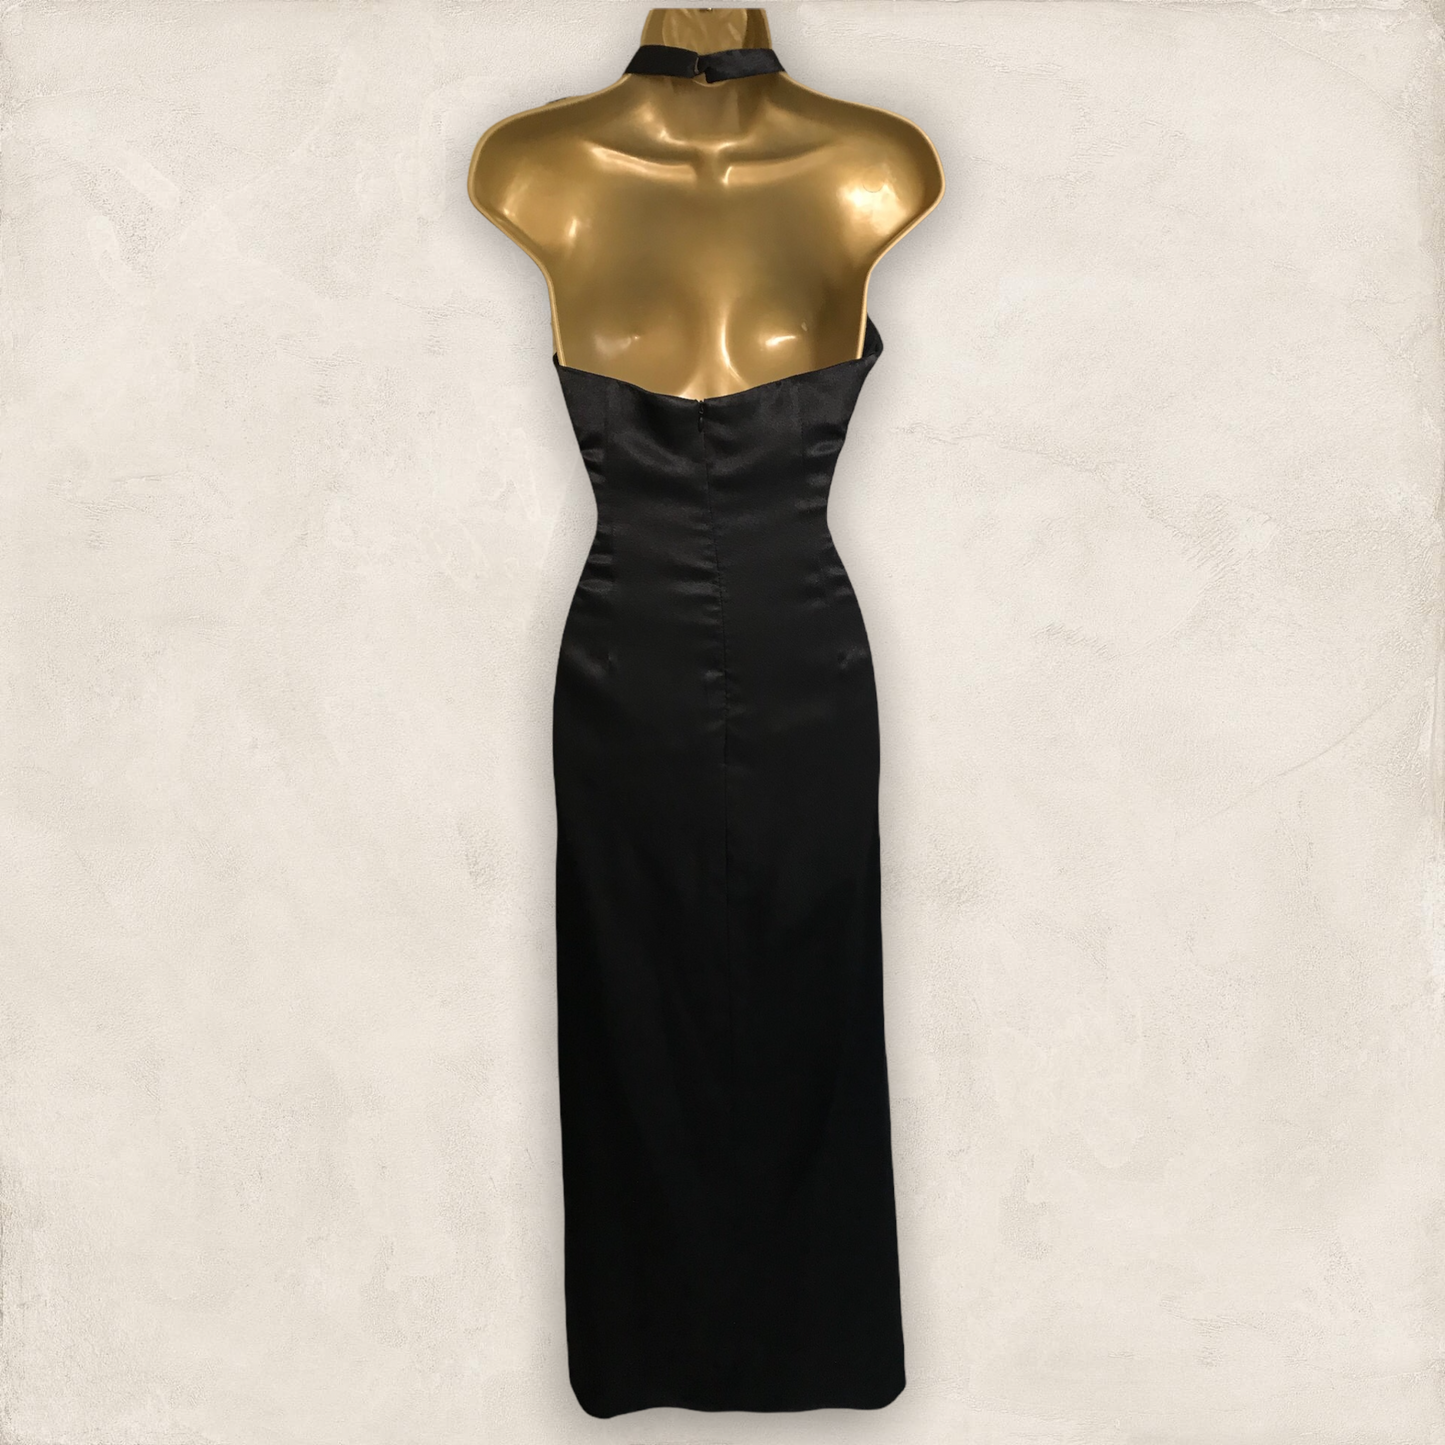 Irene's Creation Black Satin Halterneck Long Dress UK 8 US 4 EU 36 Timeless Fashions